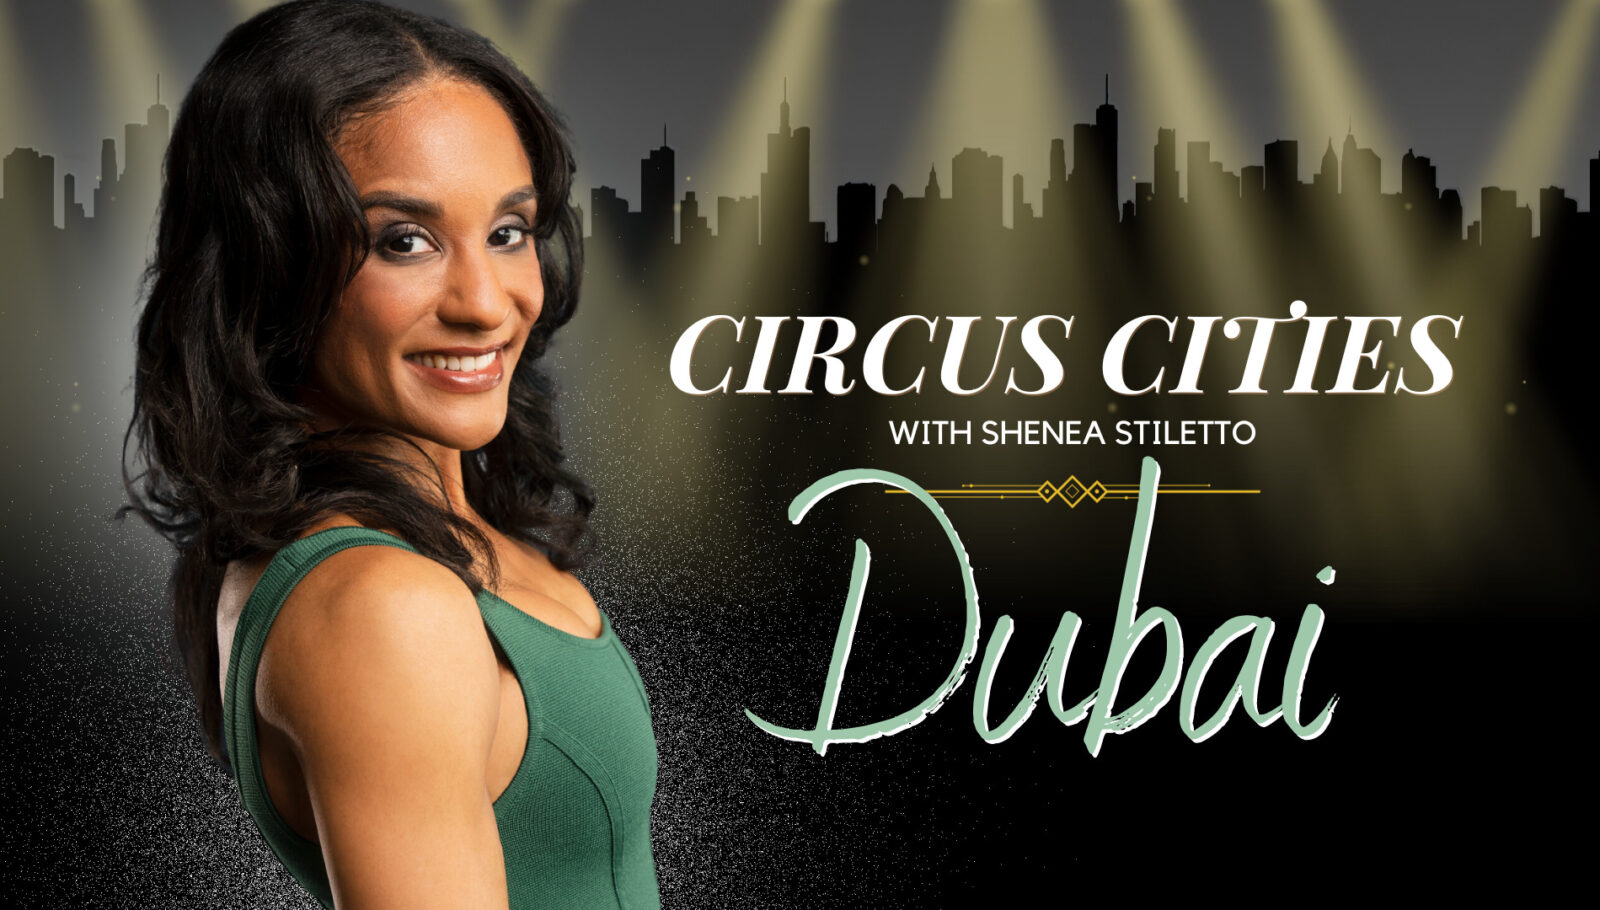 Circus Cities with Shenea Stiletto - Dubai